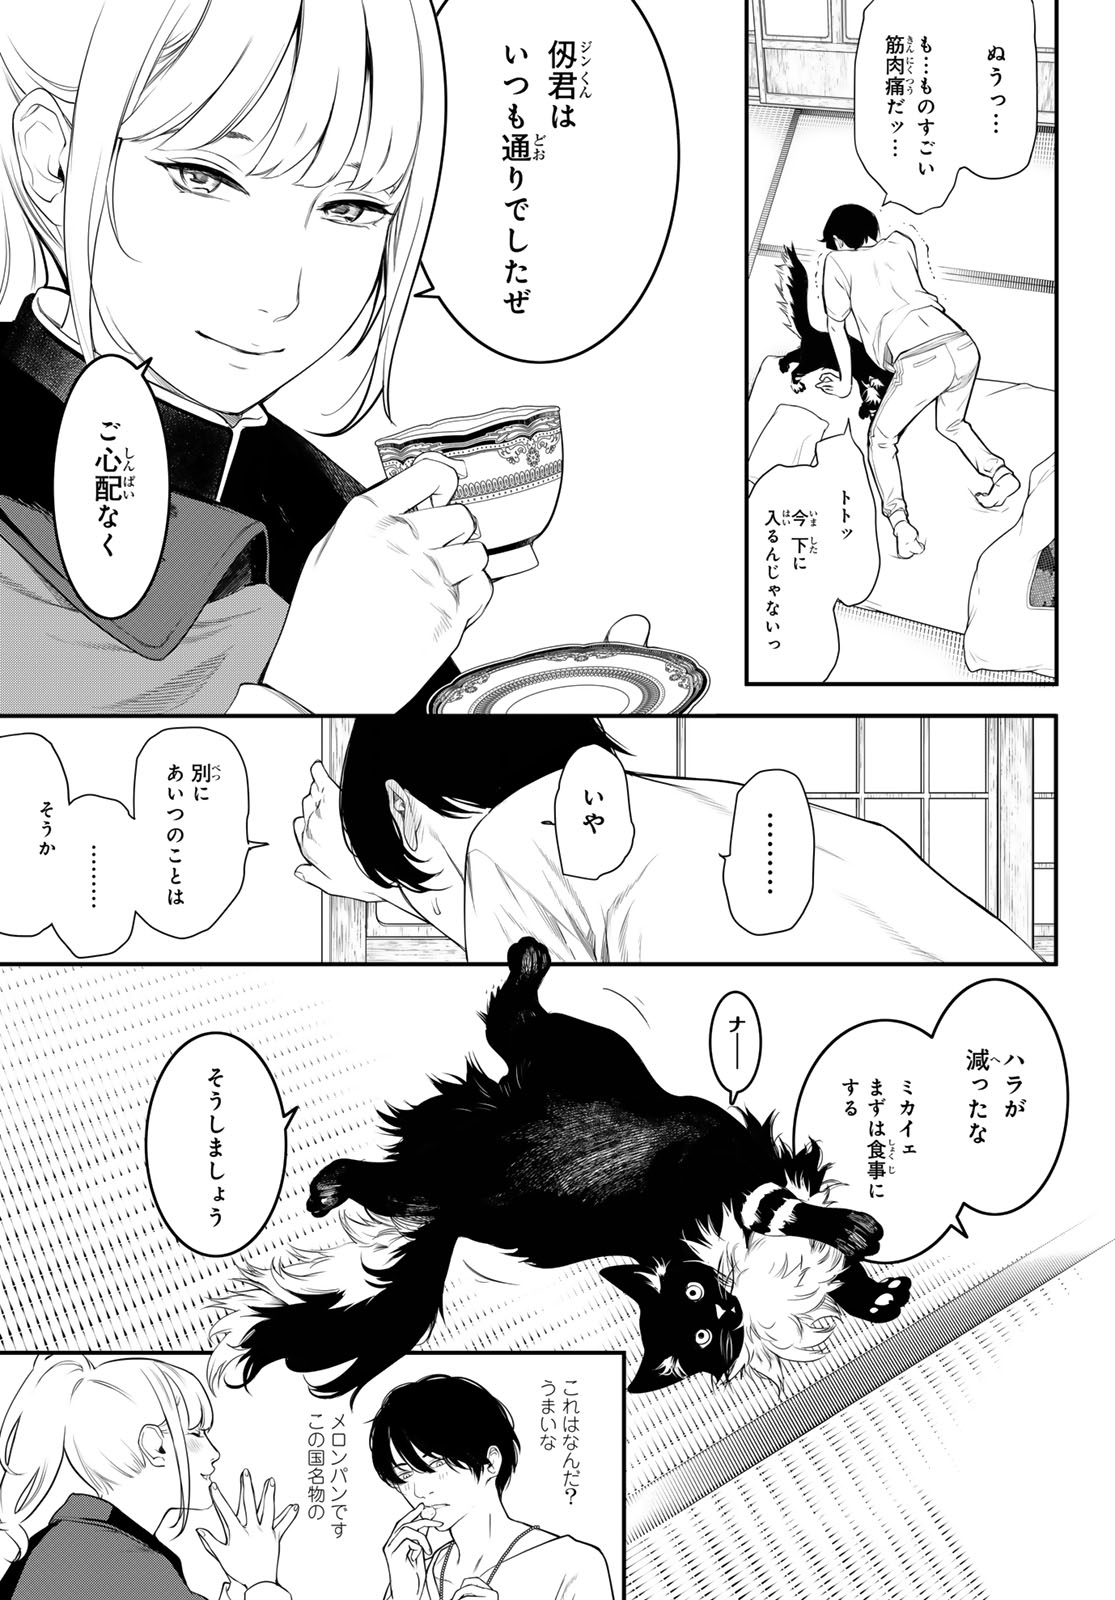 Kaijin Fugeki - Chapter 2 - Page 23